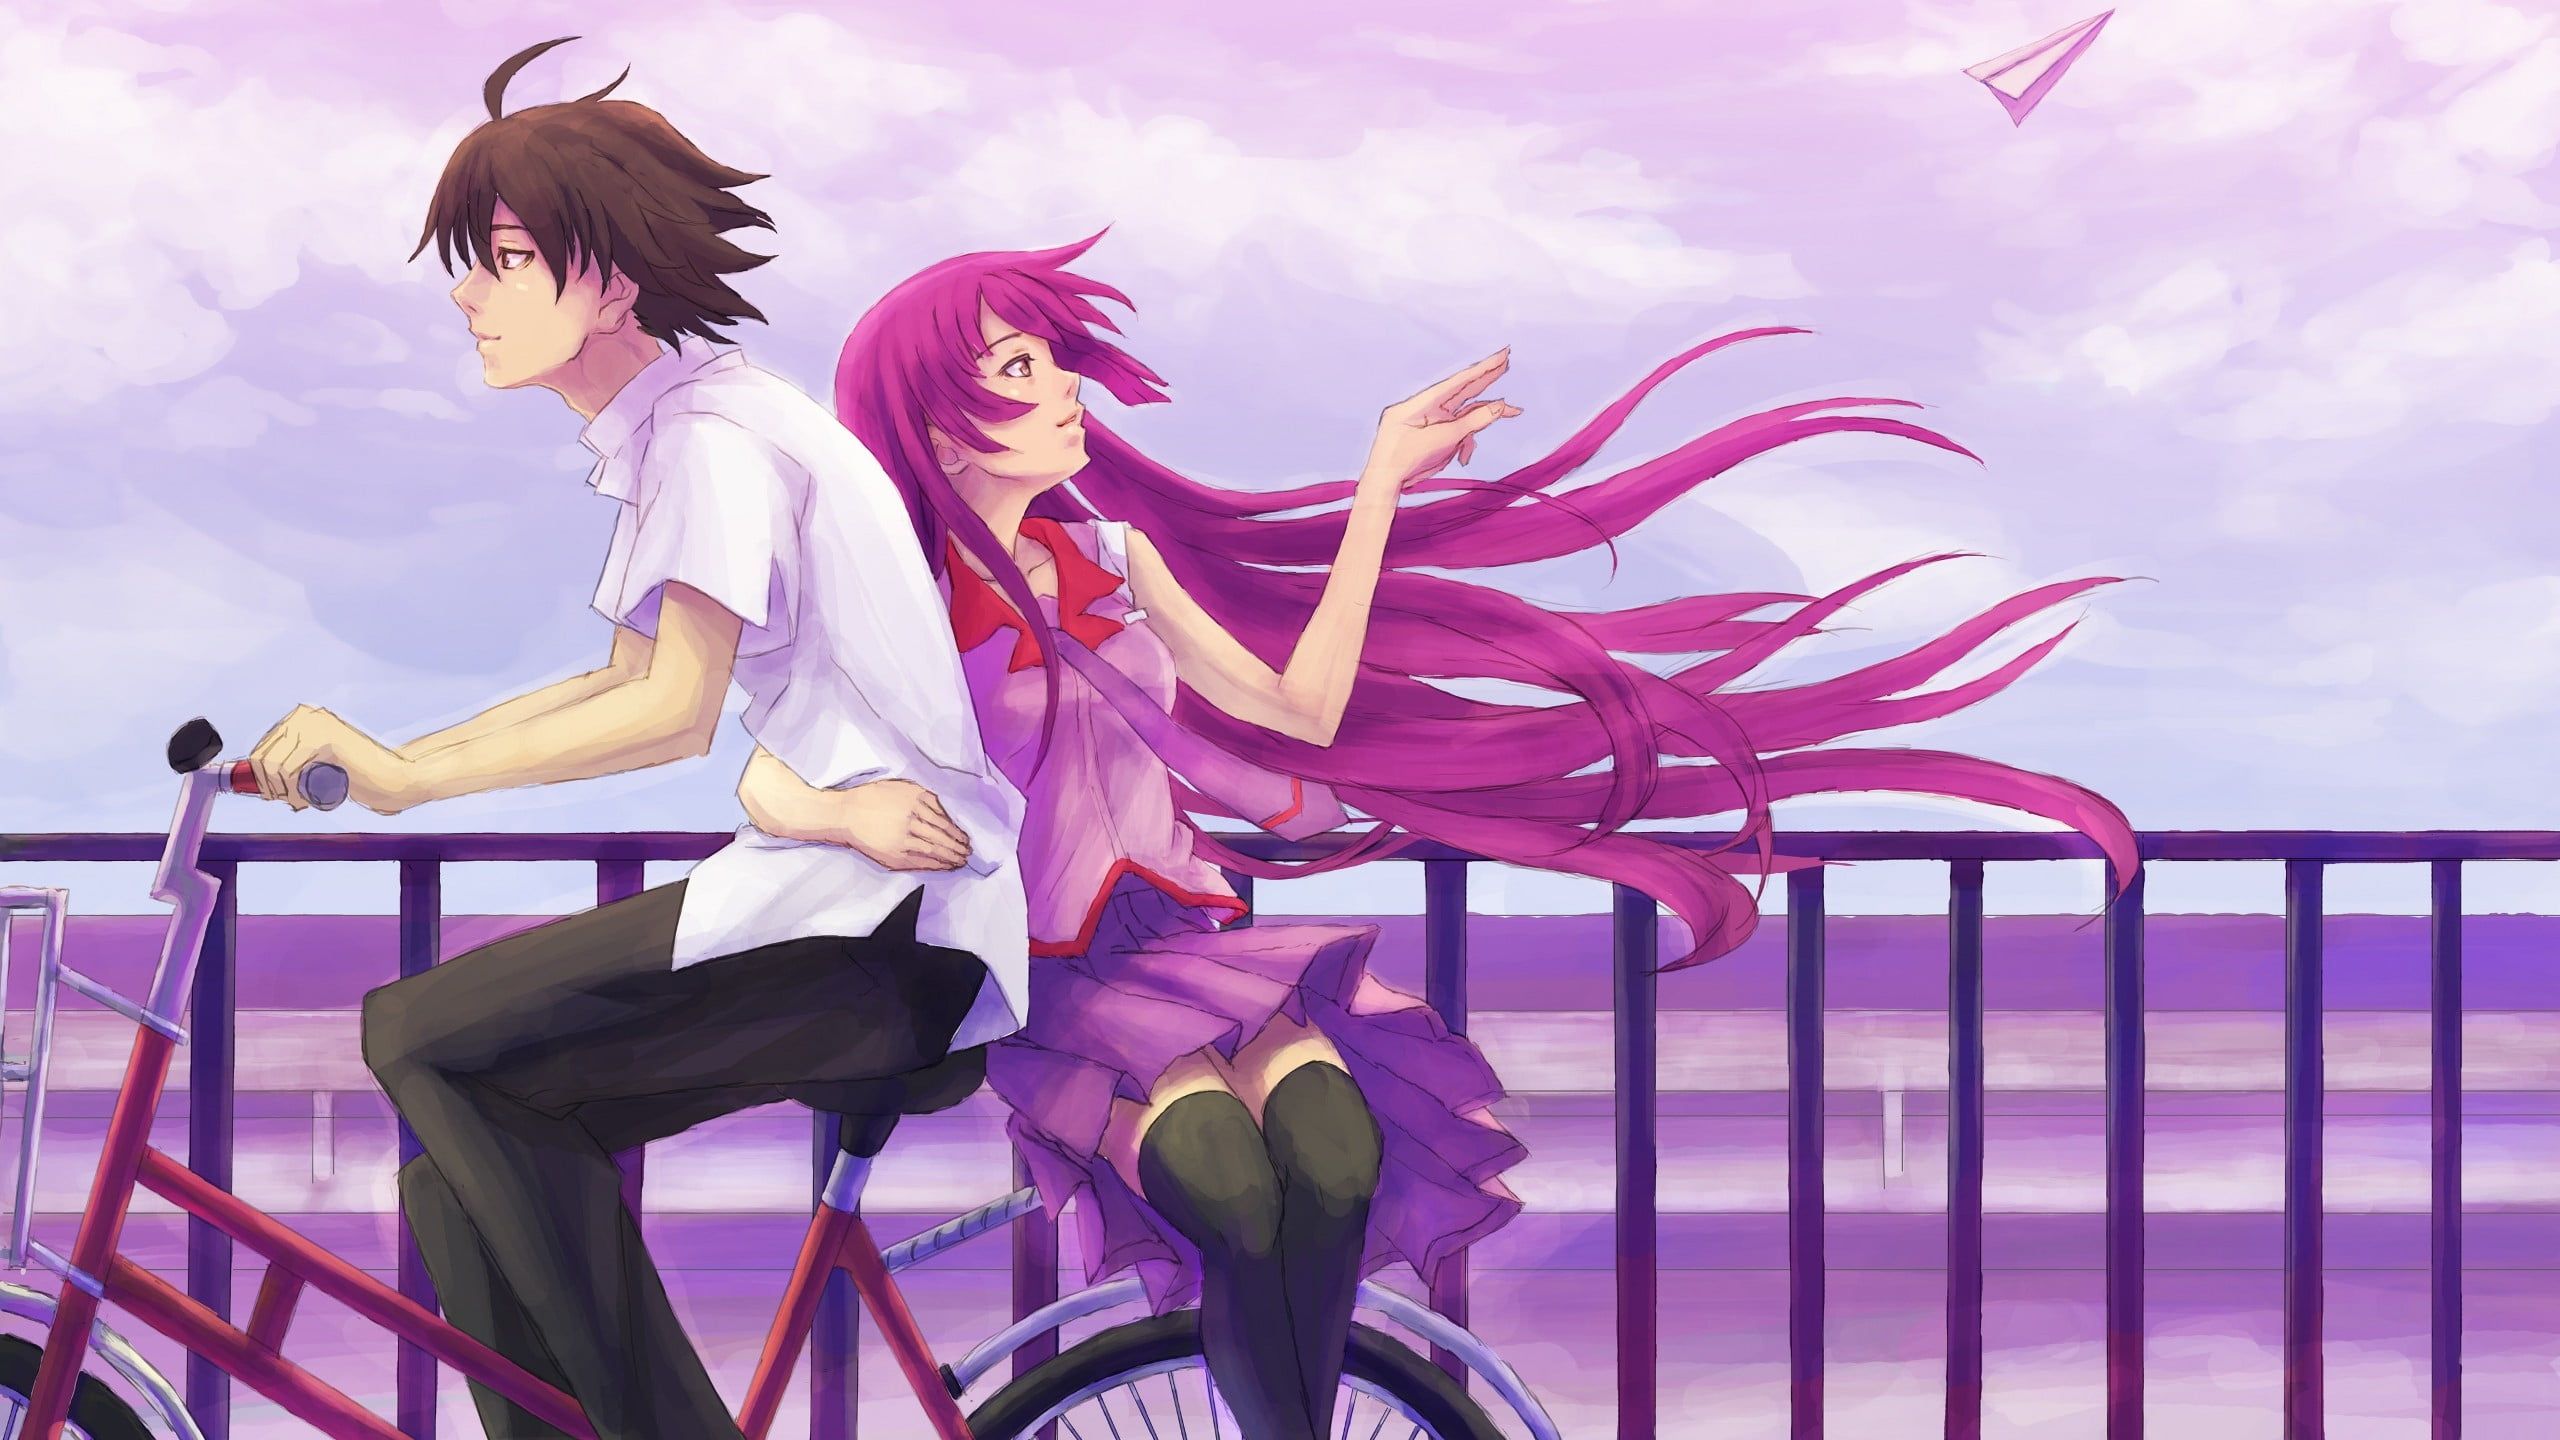 Man and woman riding bike anime character wallpaper HD wallpaper